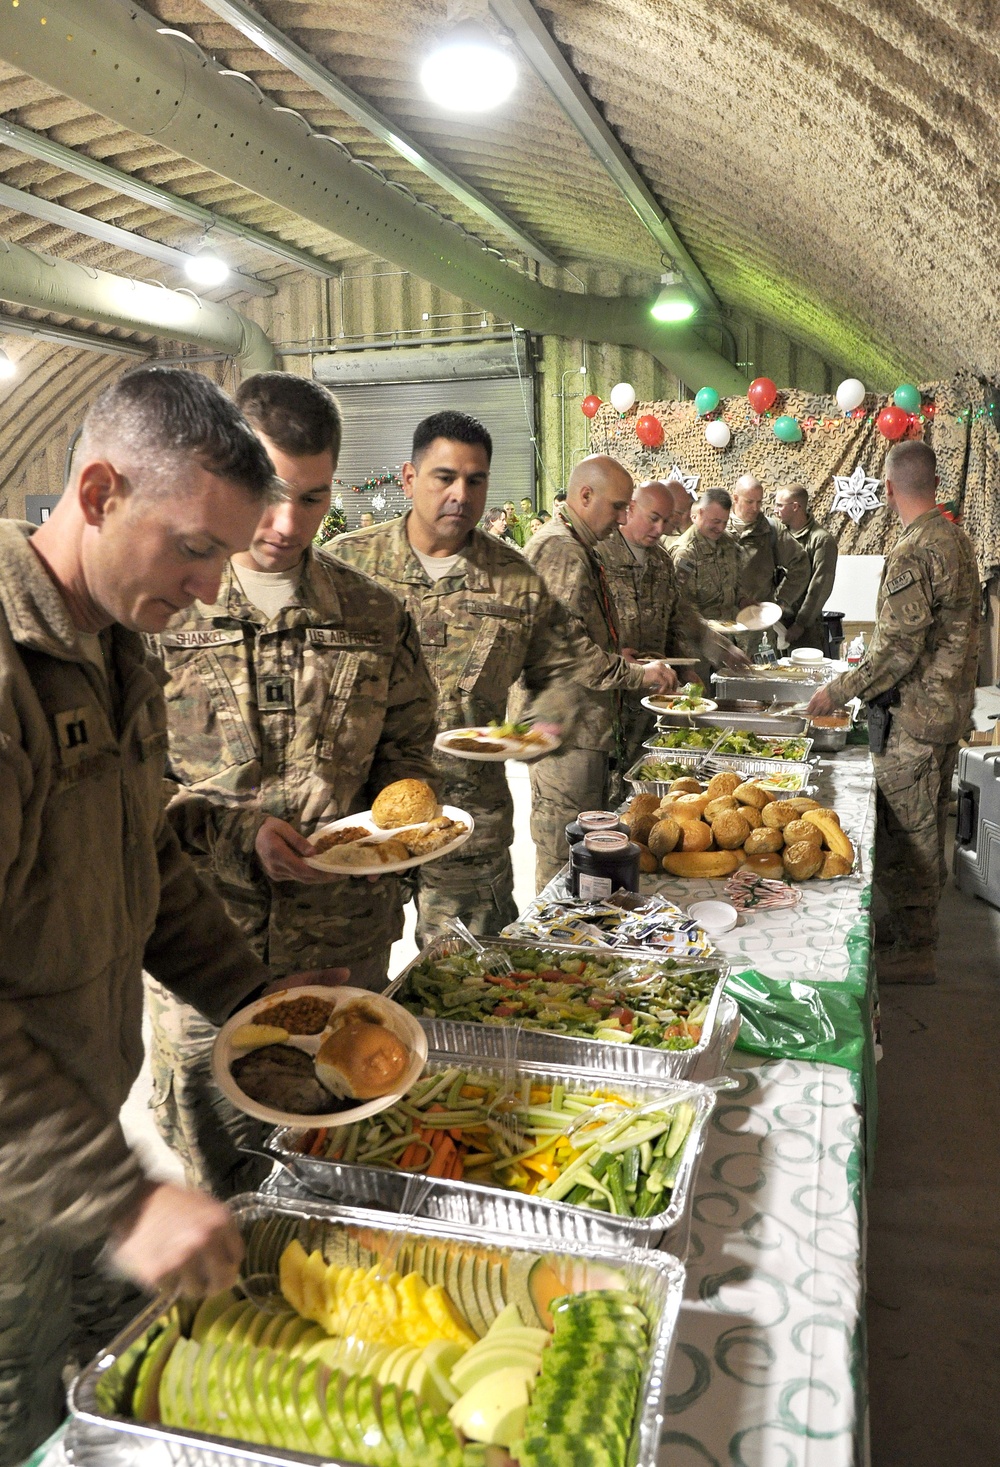 Kandahar airmen celebrate at holiday party